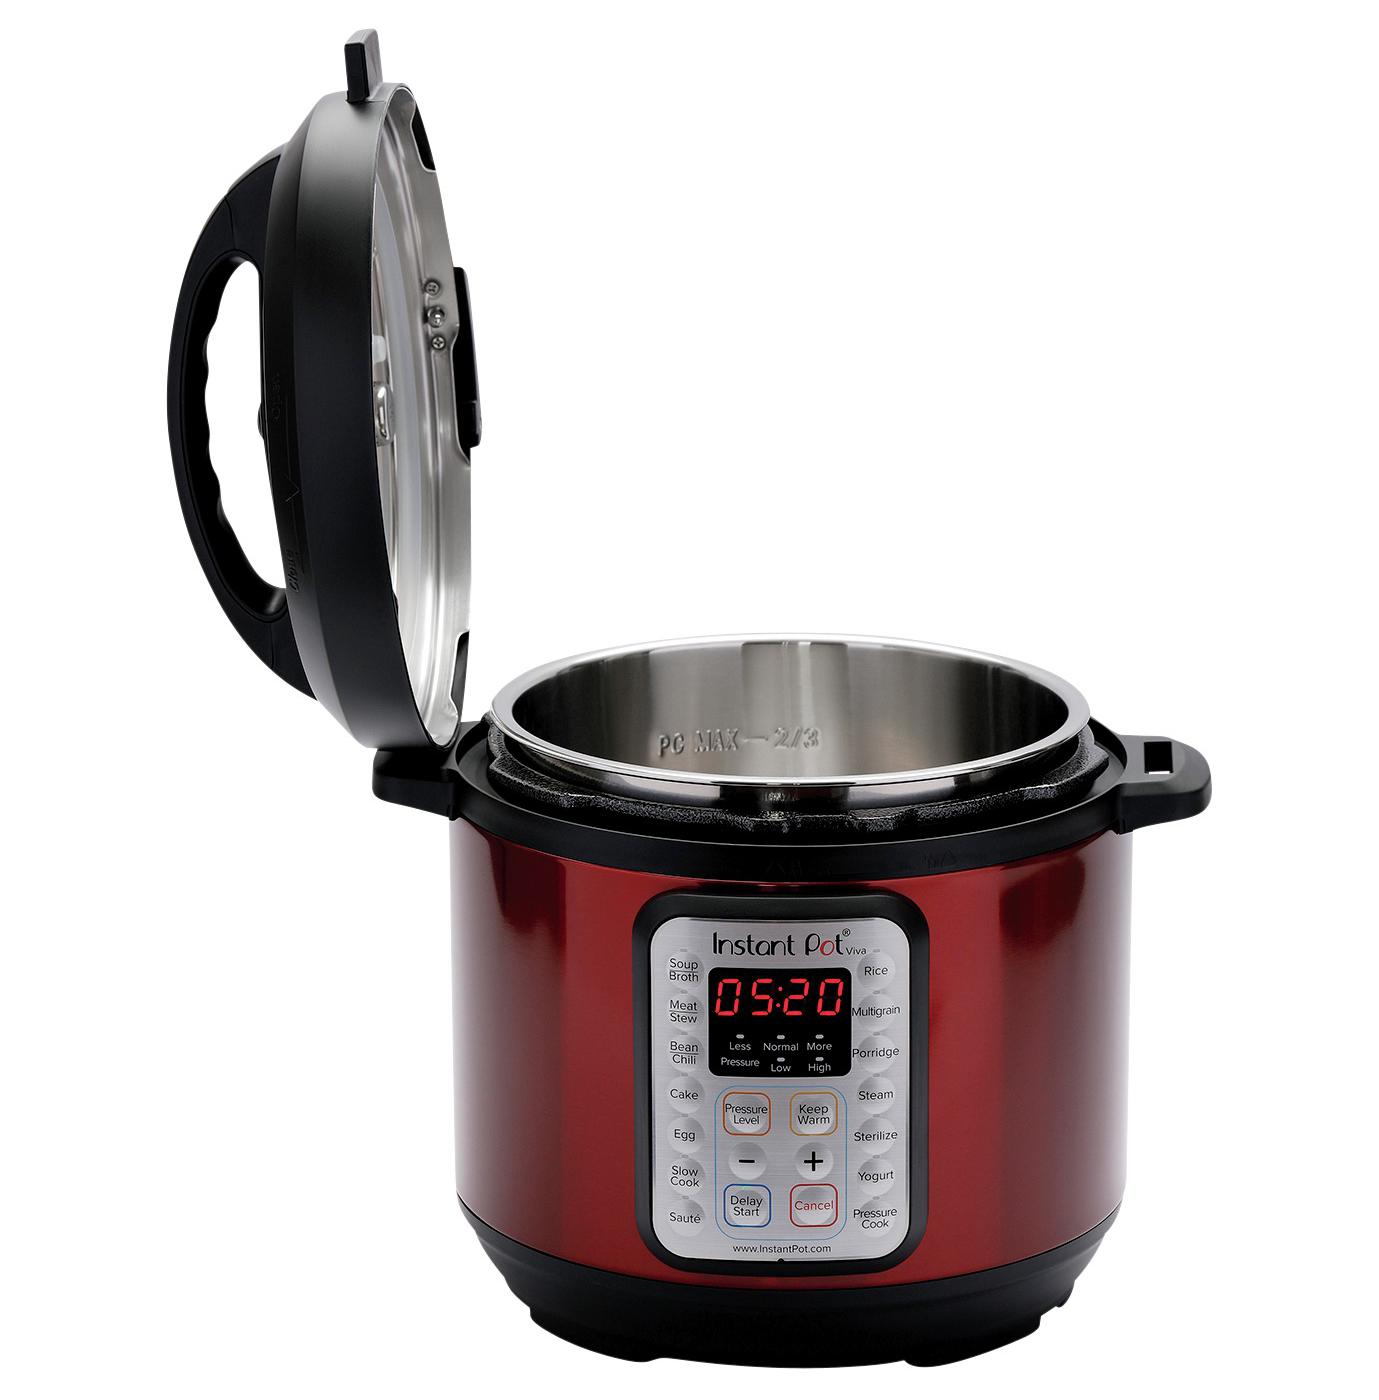 Instant Pot Red Viva 9-in-1 Multi-Use Programmable Pressure Cooker